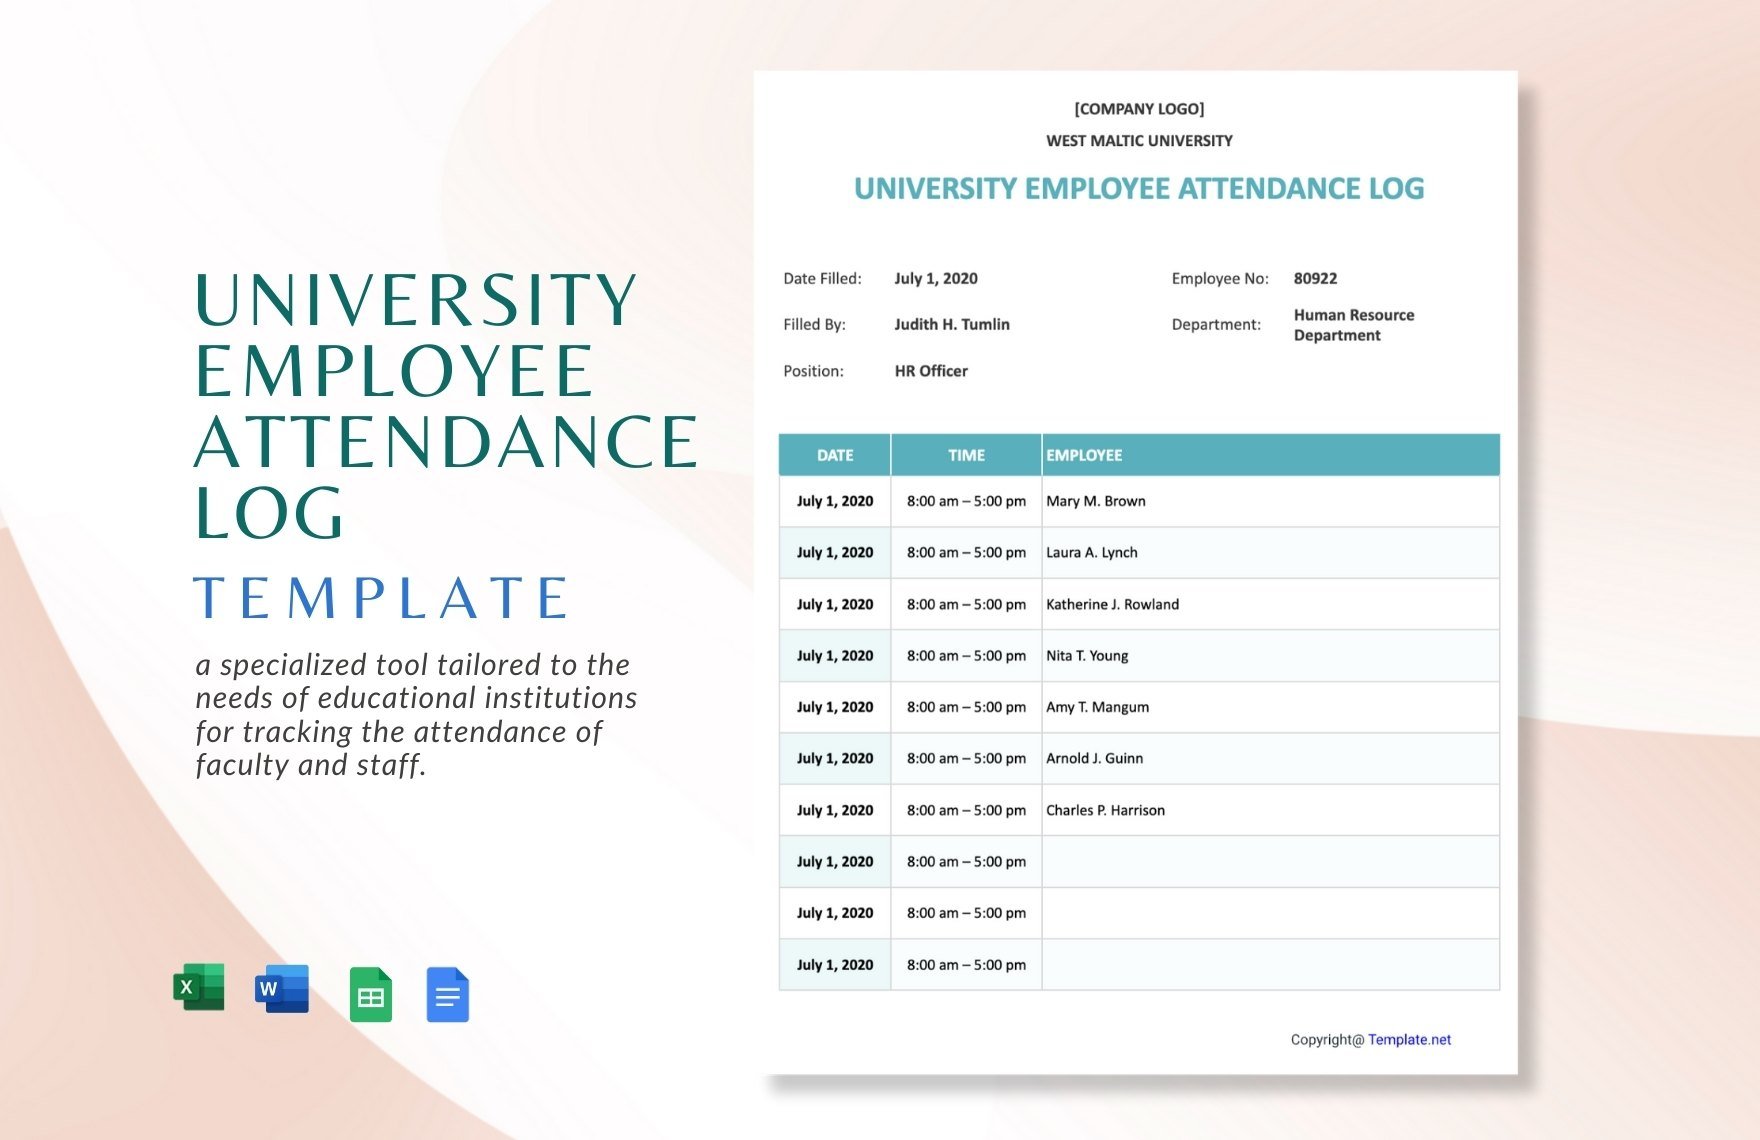 University Employee Attendance Log Template in Word, Google Docs, Excel, Google Sheets